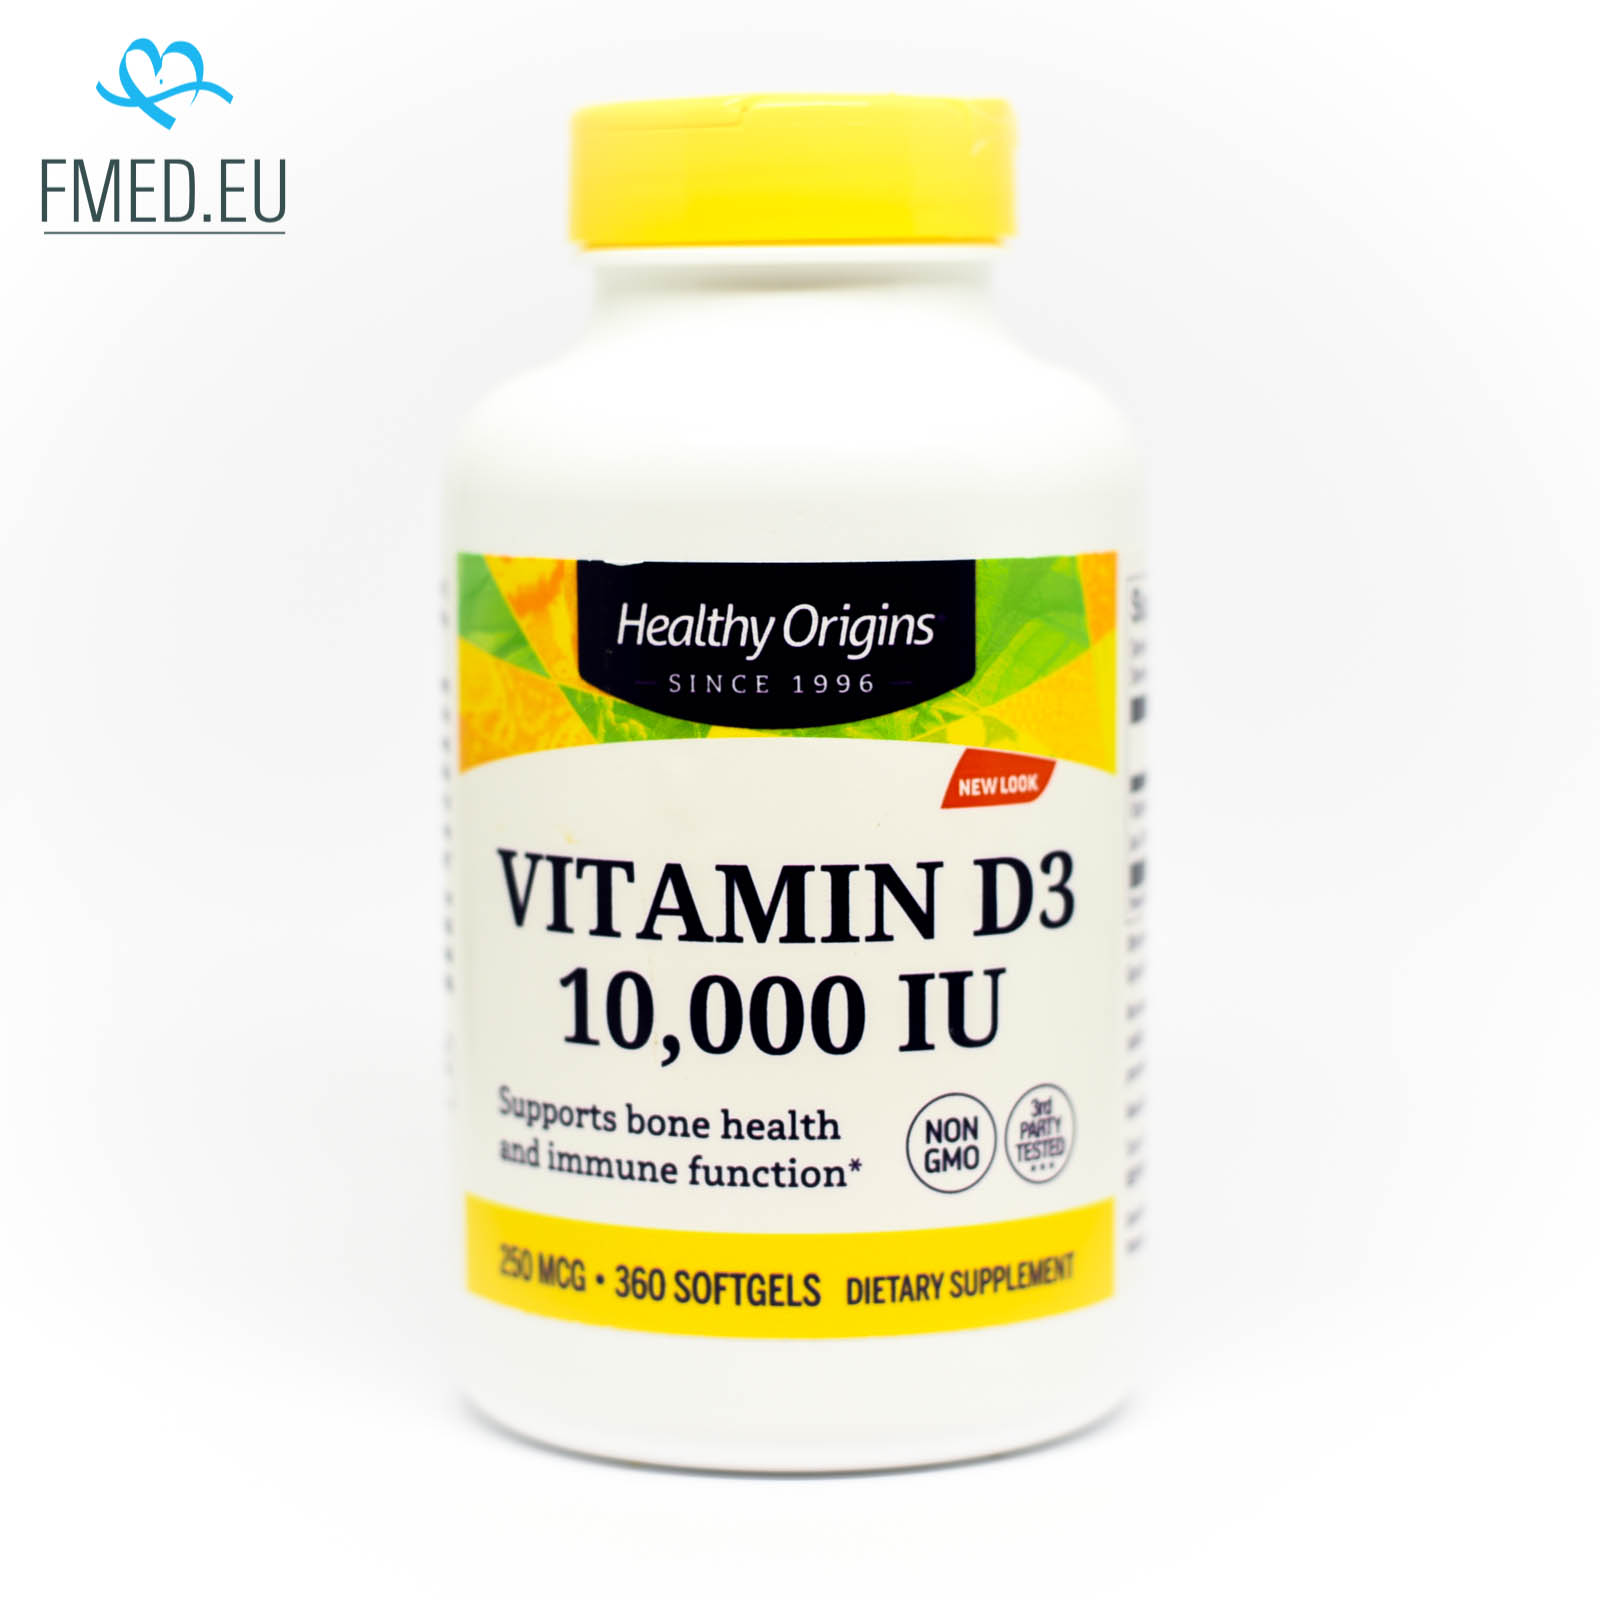 vitamin D covid corona immune system bone muscle sun